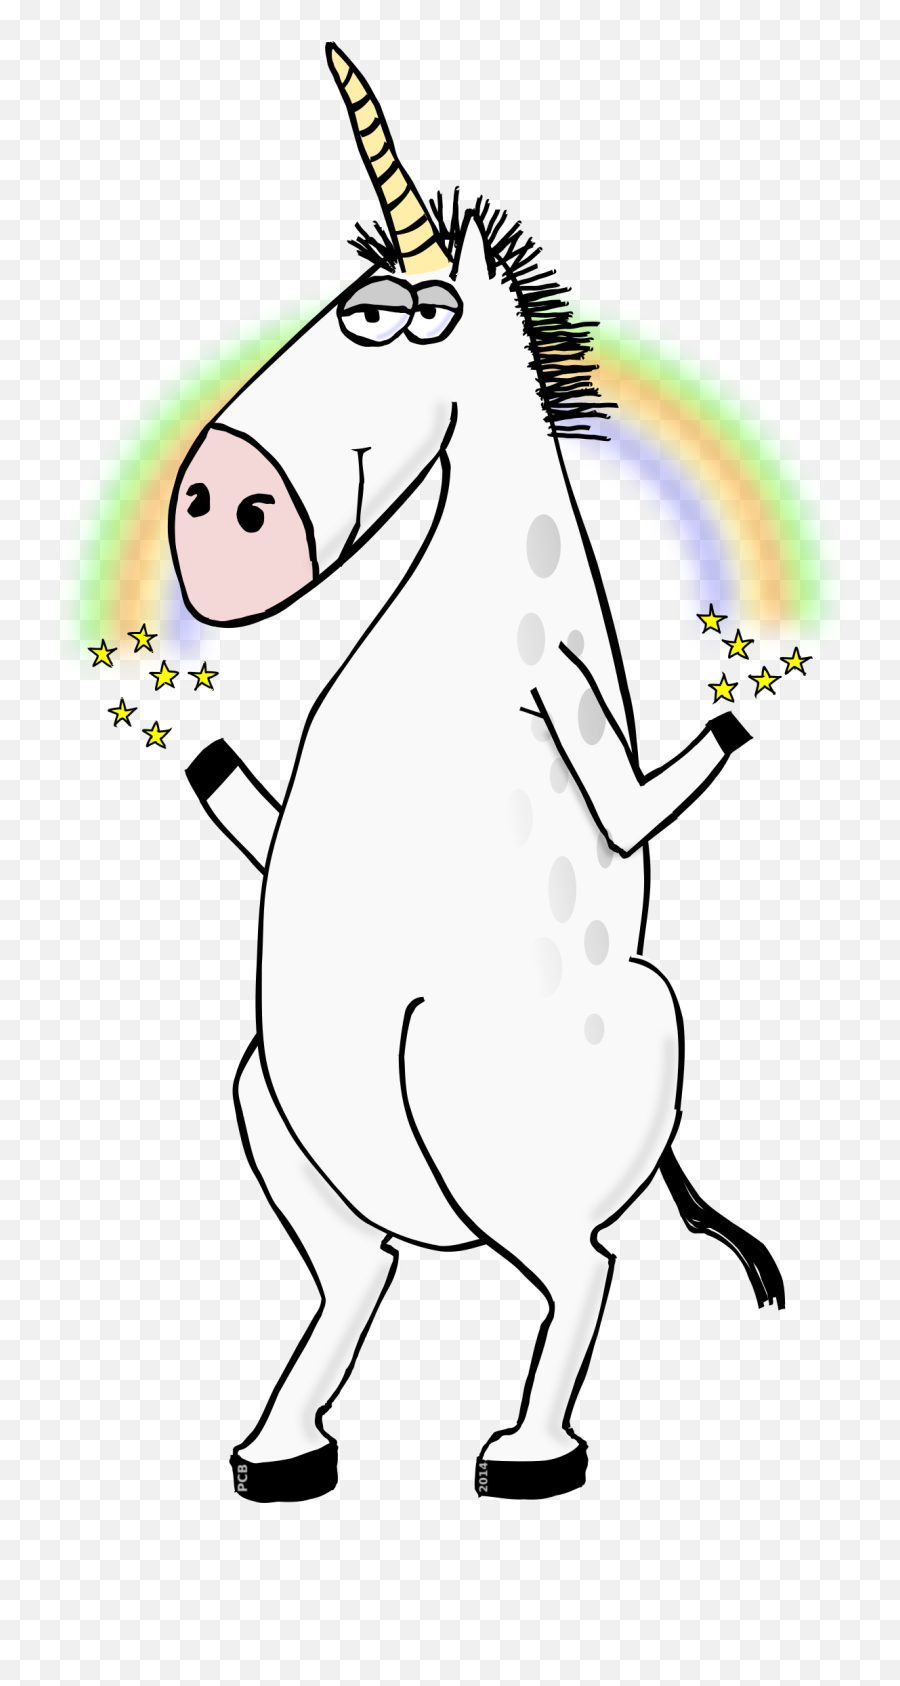 Unicorn Free To Use Clipart 2 - Unicorn Standing Up Emoji,Unicorn Clipart